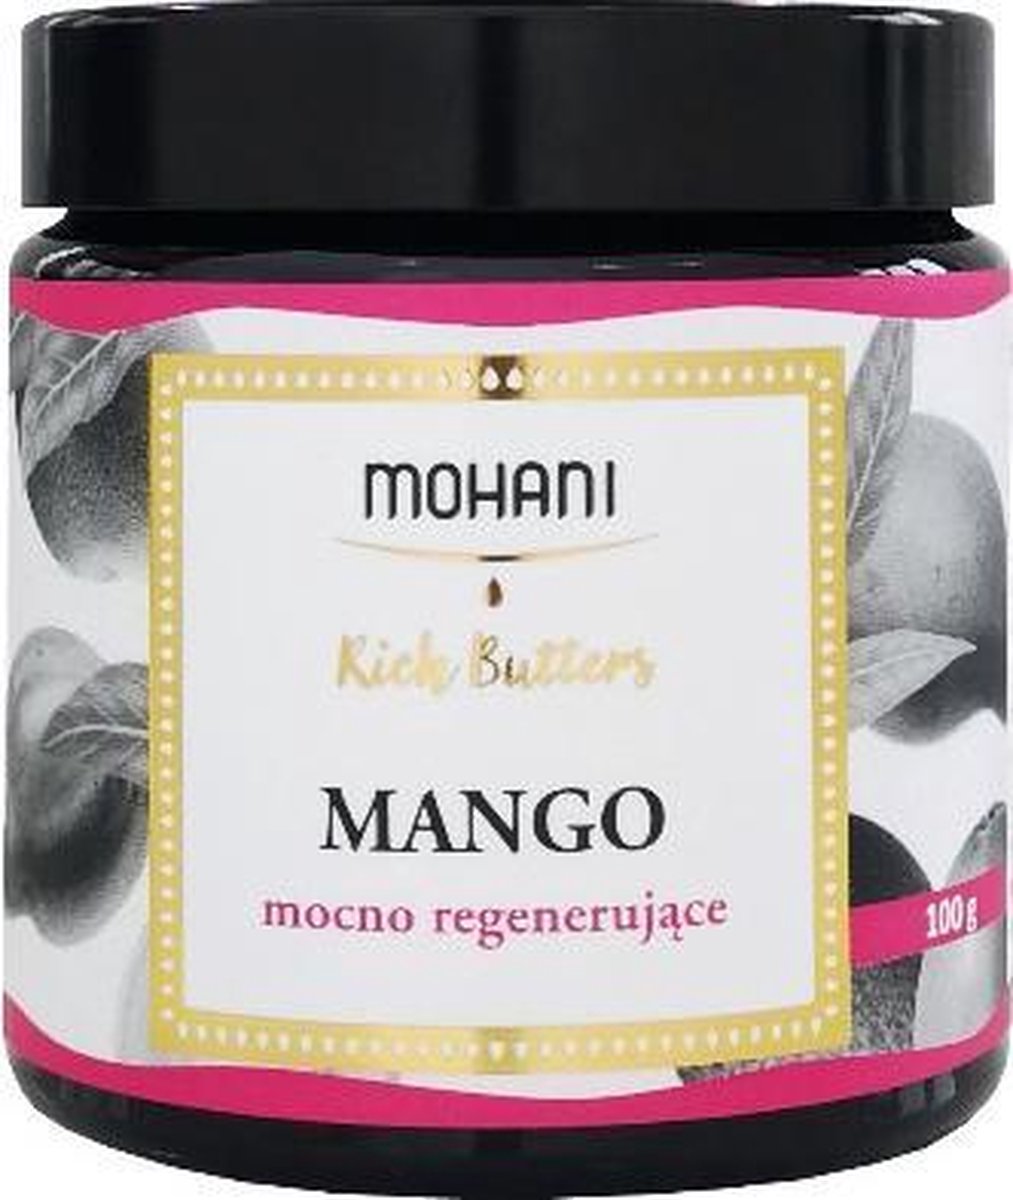 Mohani - Mystic India Butter From Pesto Mango 100G